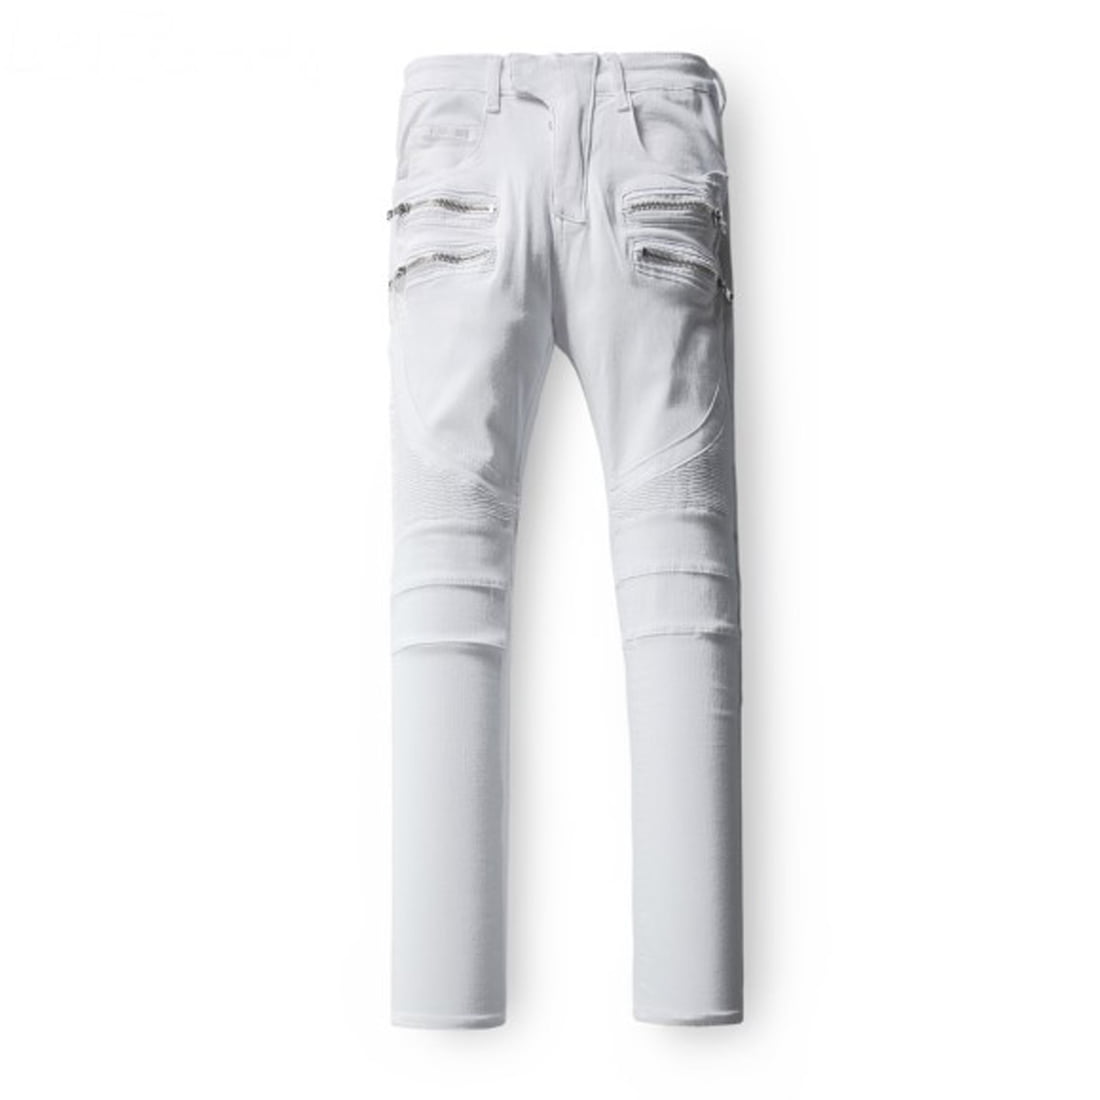 walmart white jeans